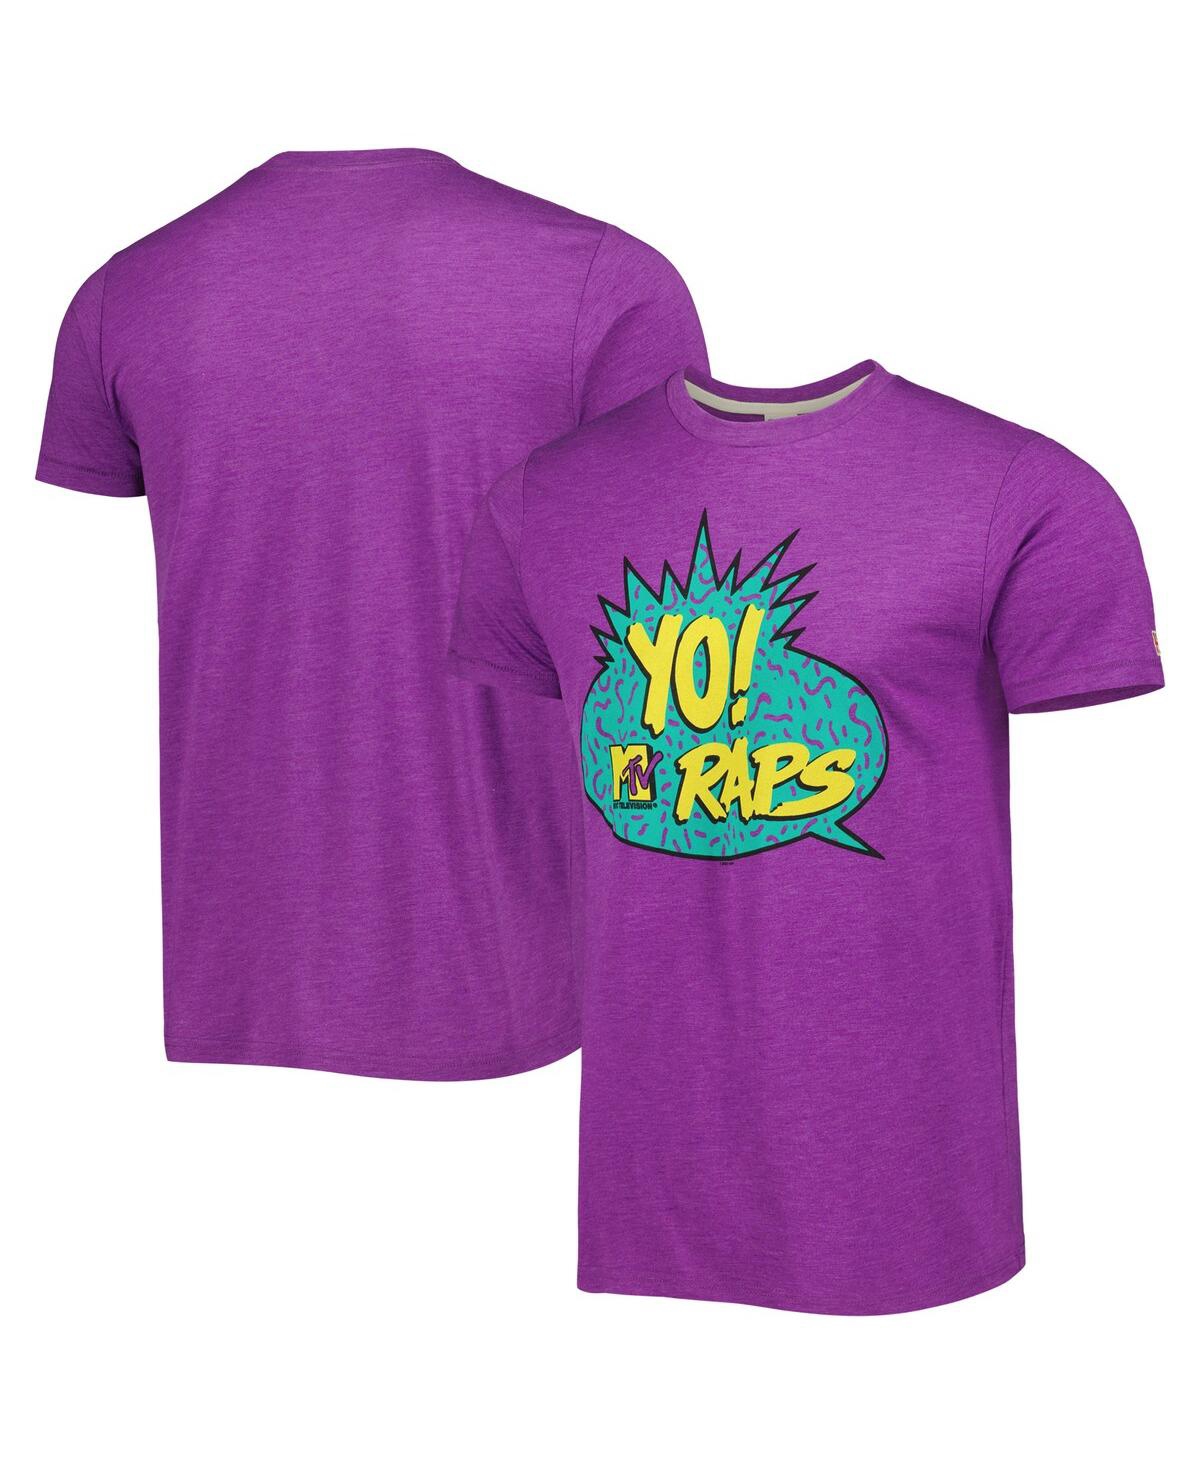 Men's and Women's Homage Purple Yo! Mtv Raps Tri-Blend T-shirt - Purple